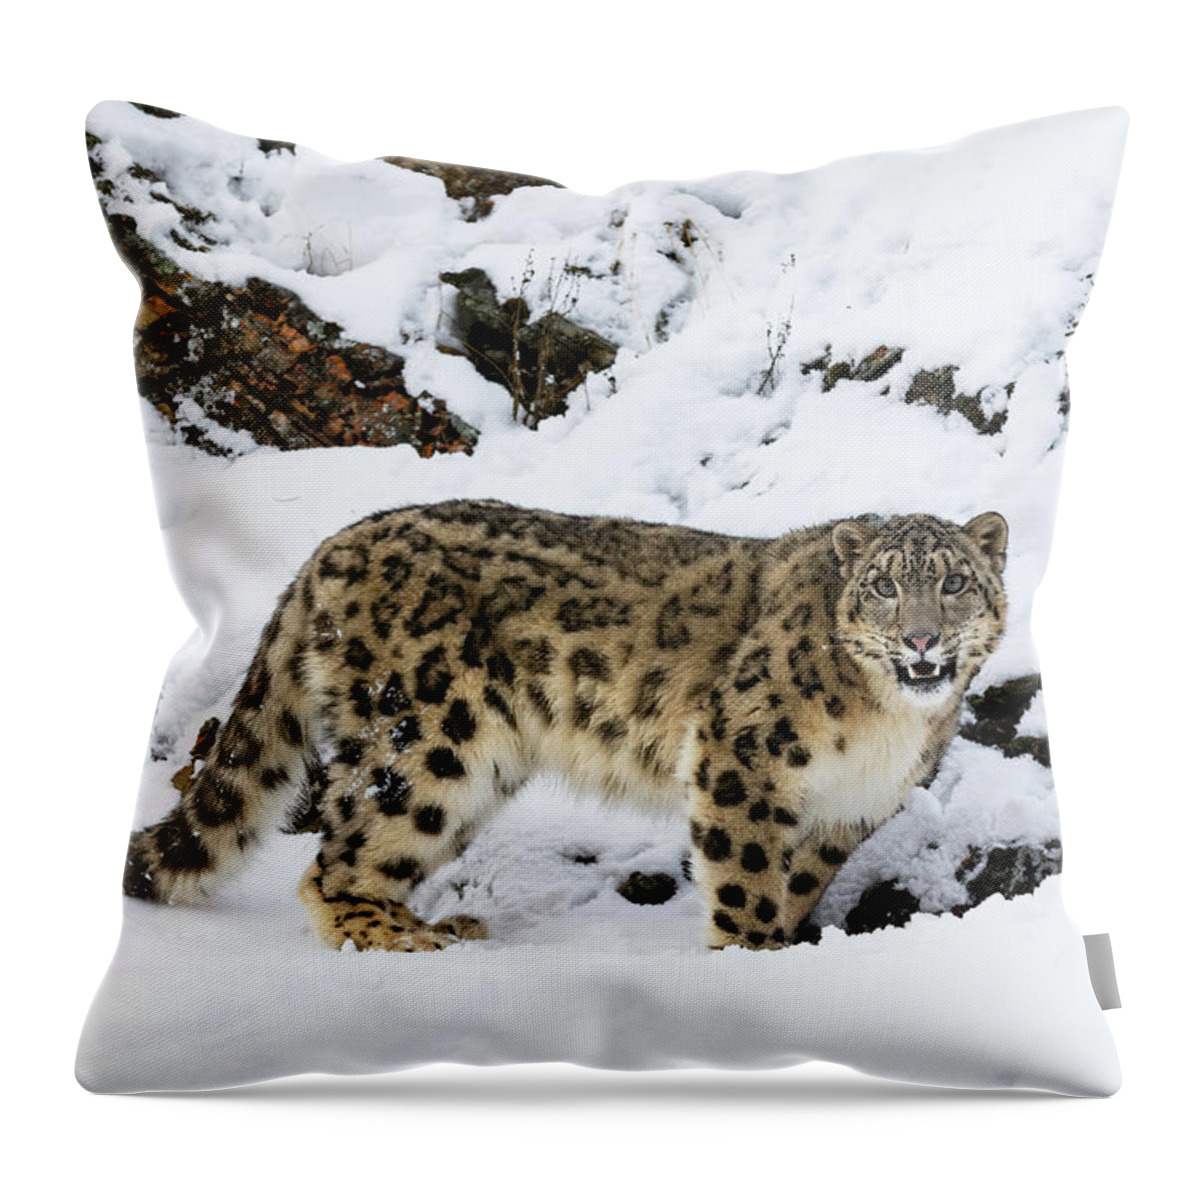 Himalayan Cat Throw Pillow featuring the photograph Himalayan Cat by Wes and Dotty Weber